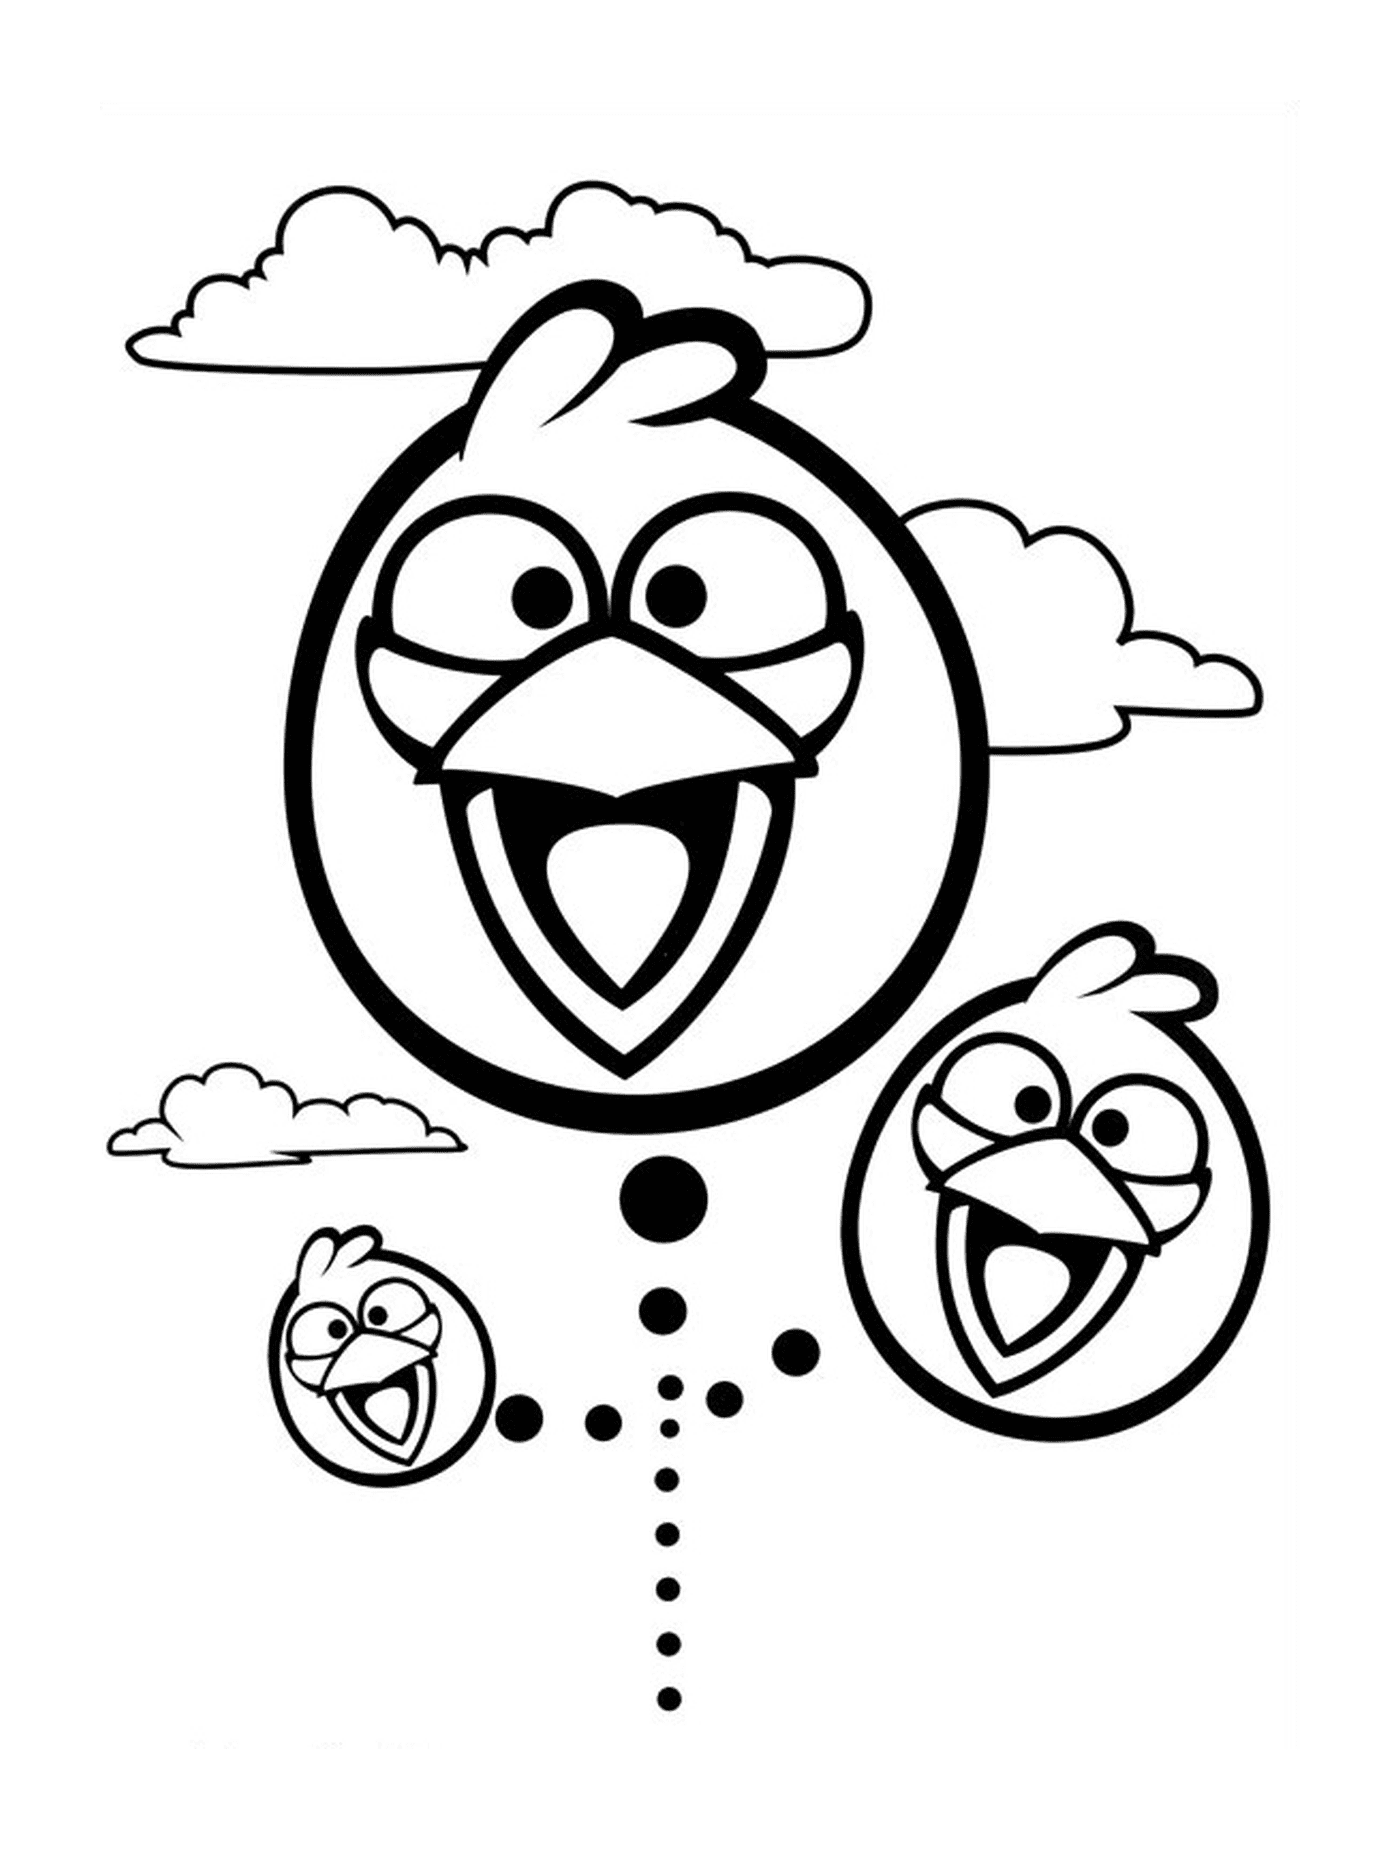  Angry Angry Birds sorrindo e feliz 